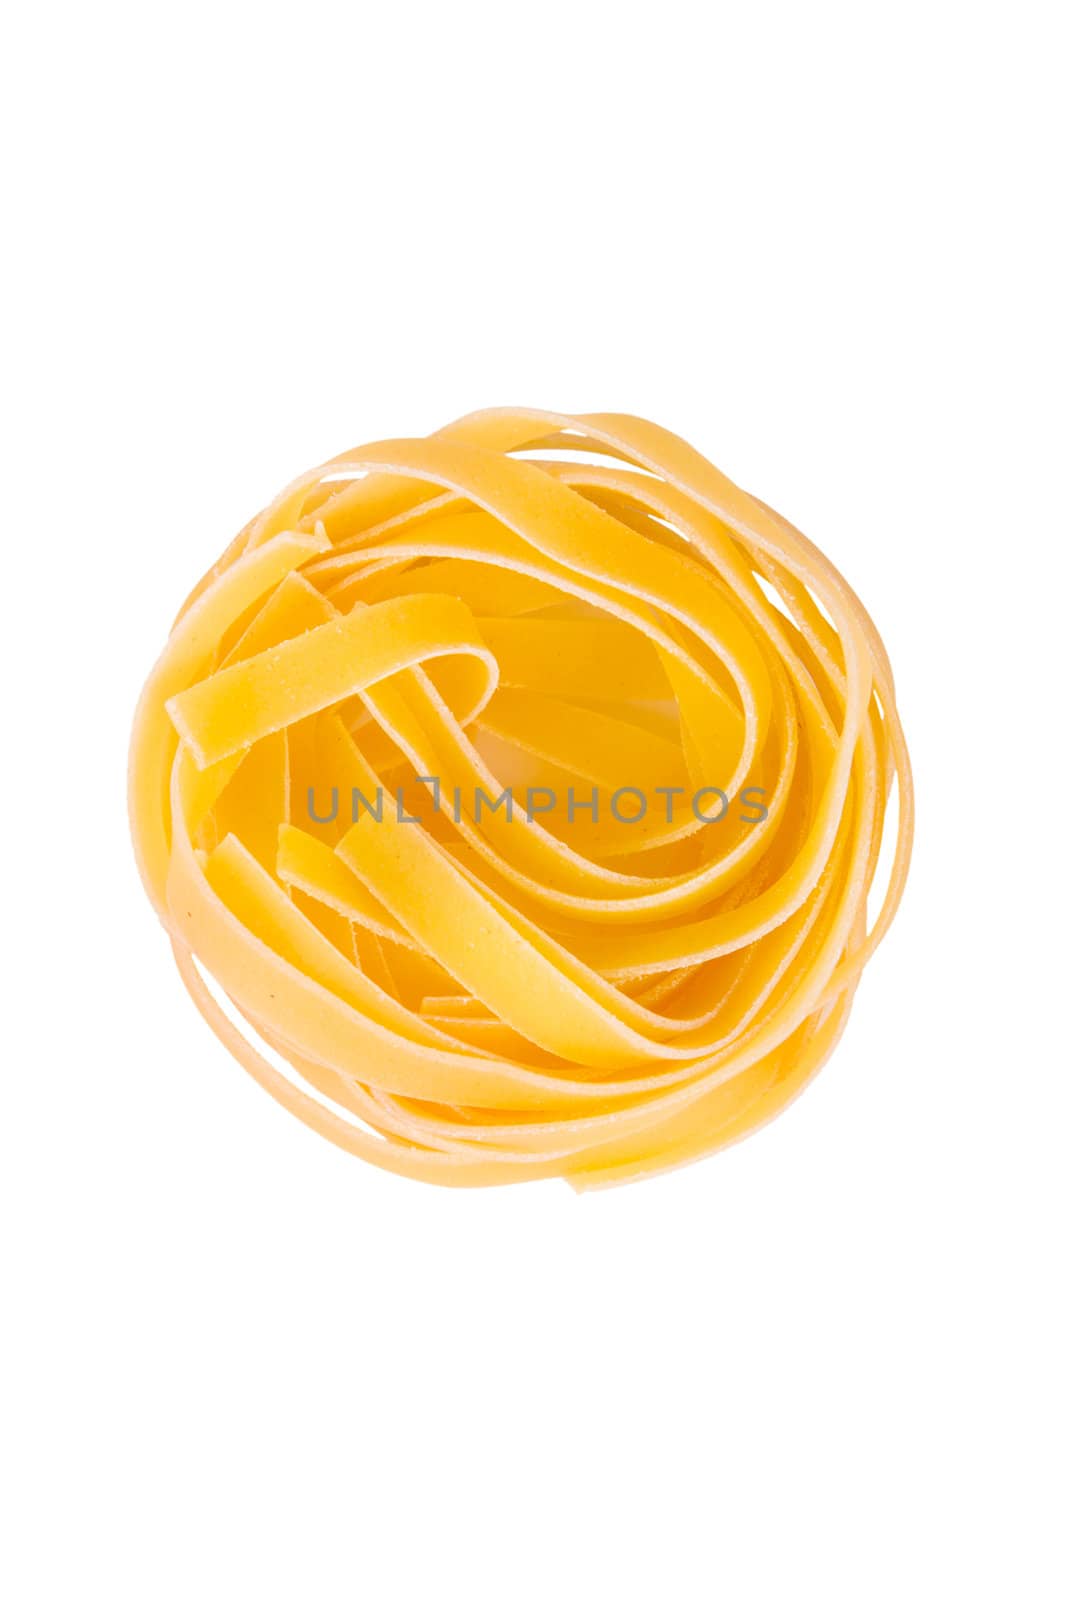 Italian pasta: tagliatelle, isolated on white background